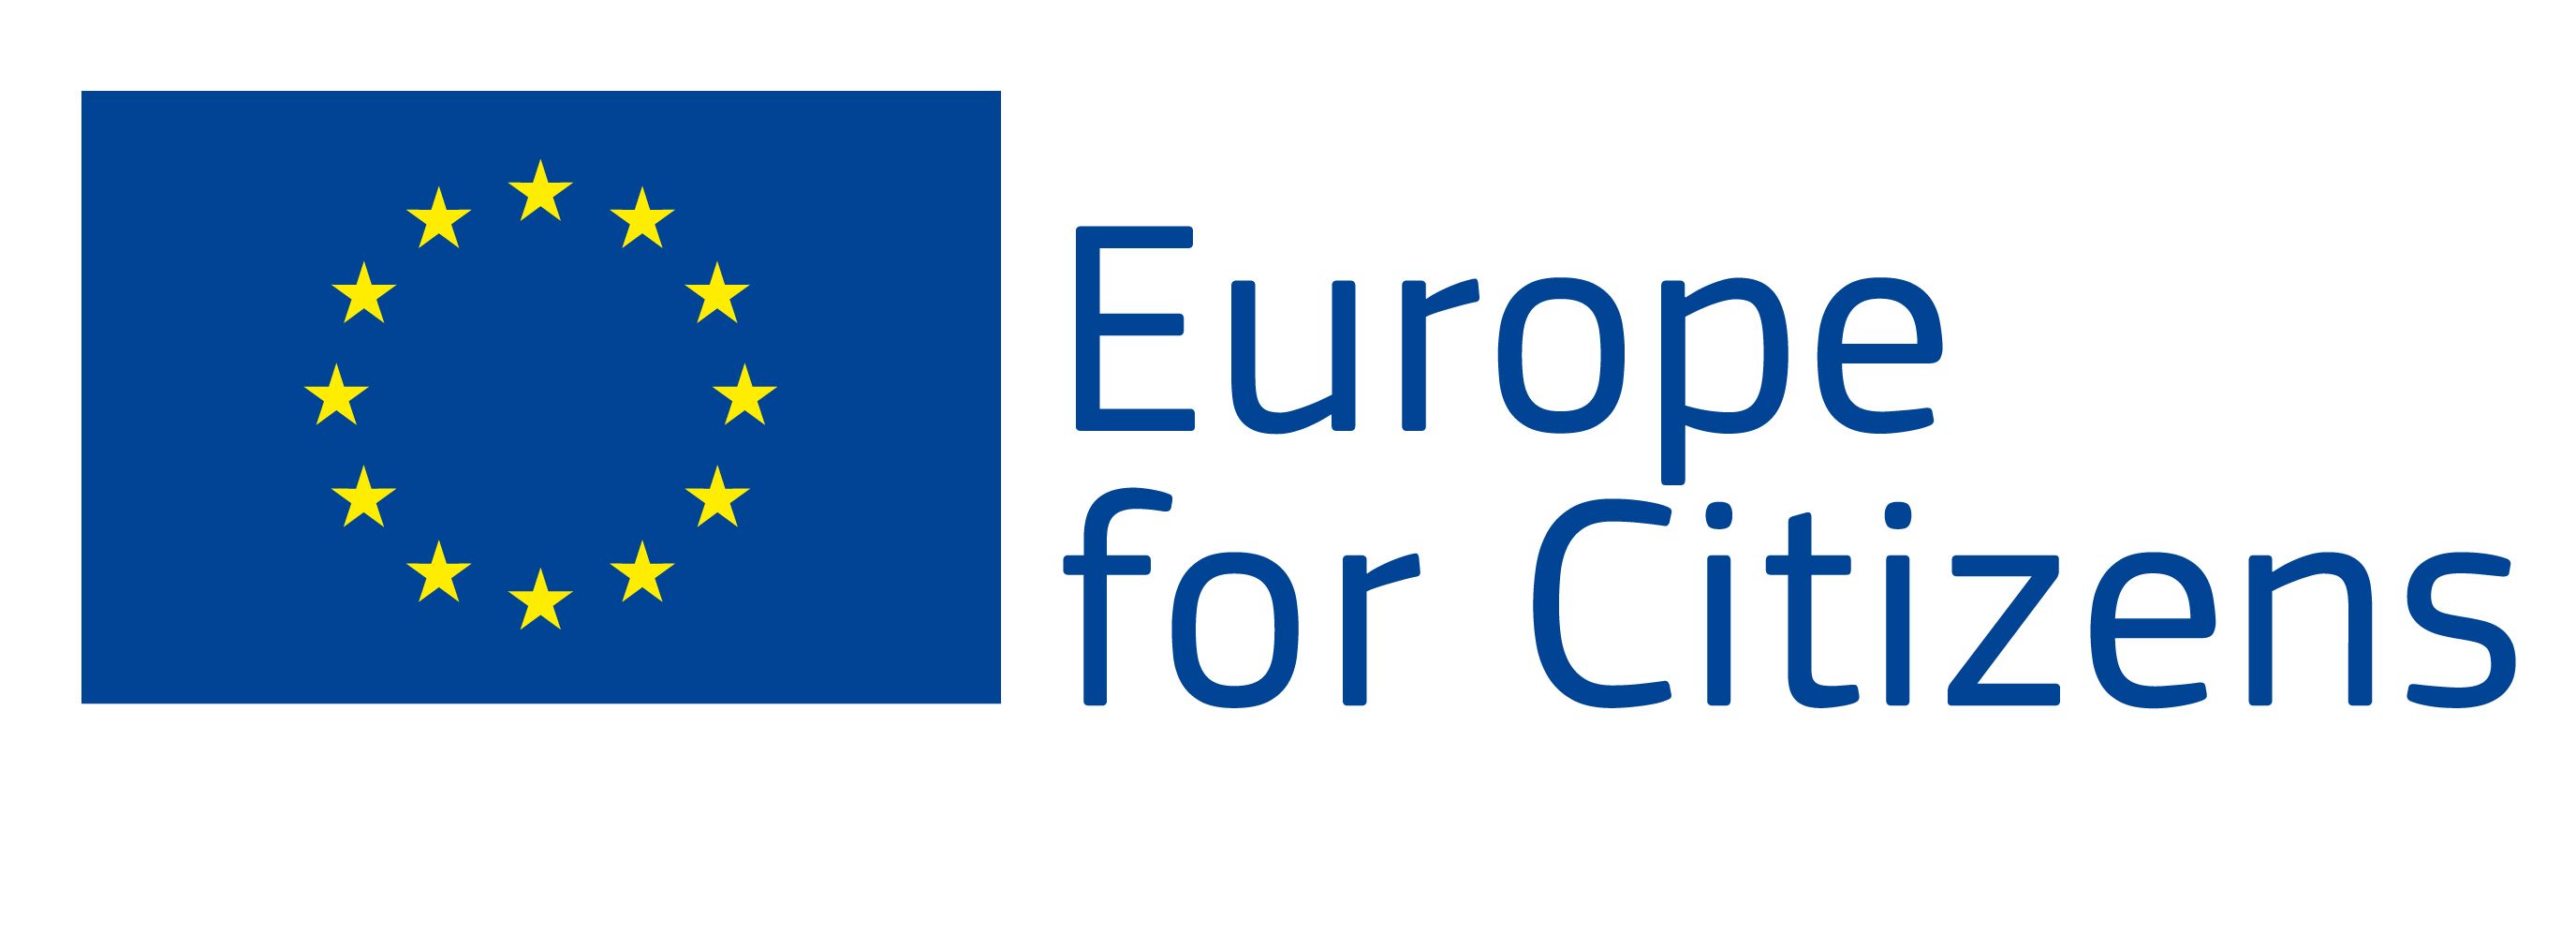 Europe for Citizens logo